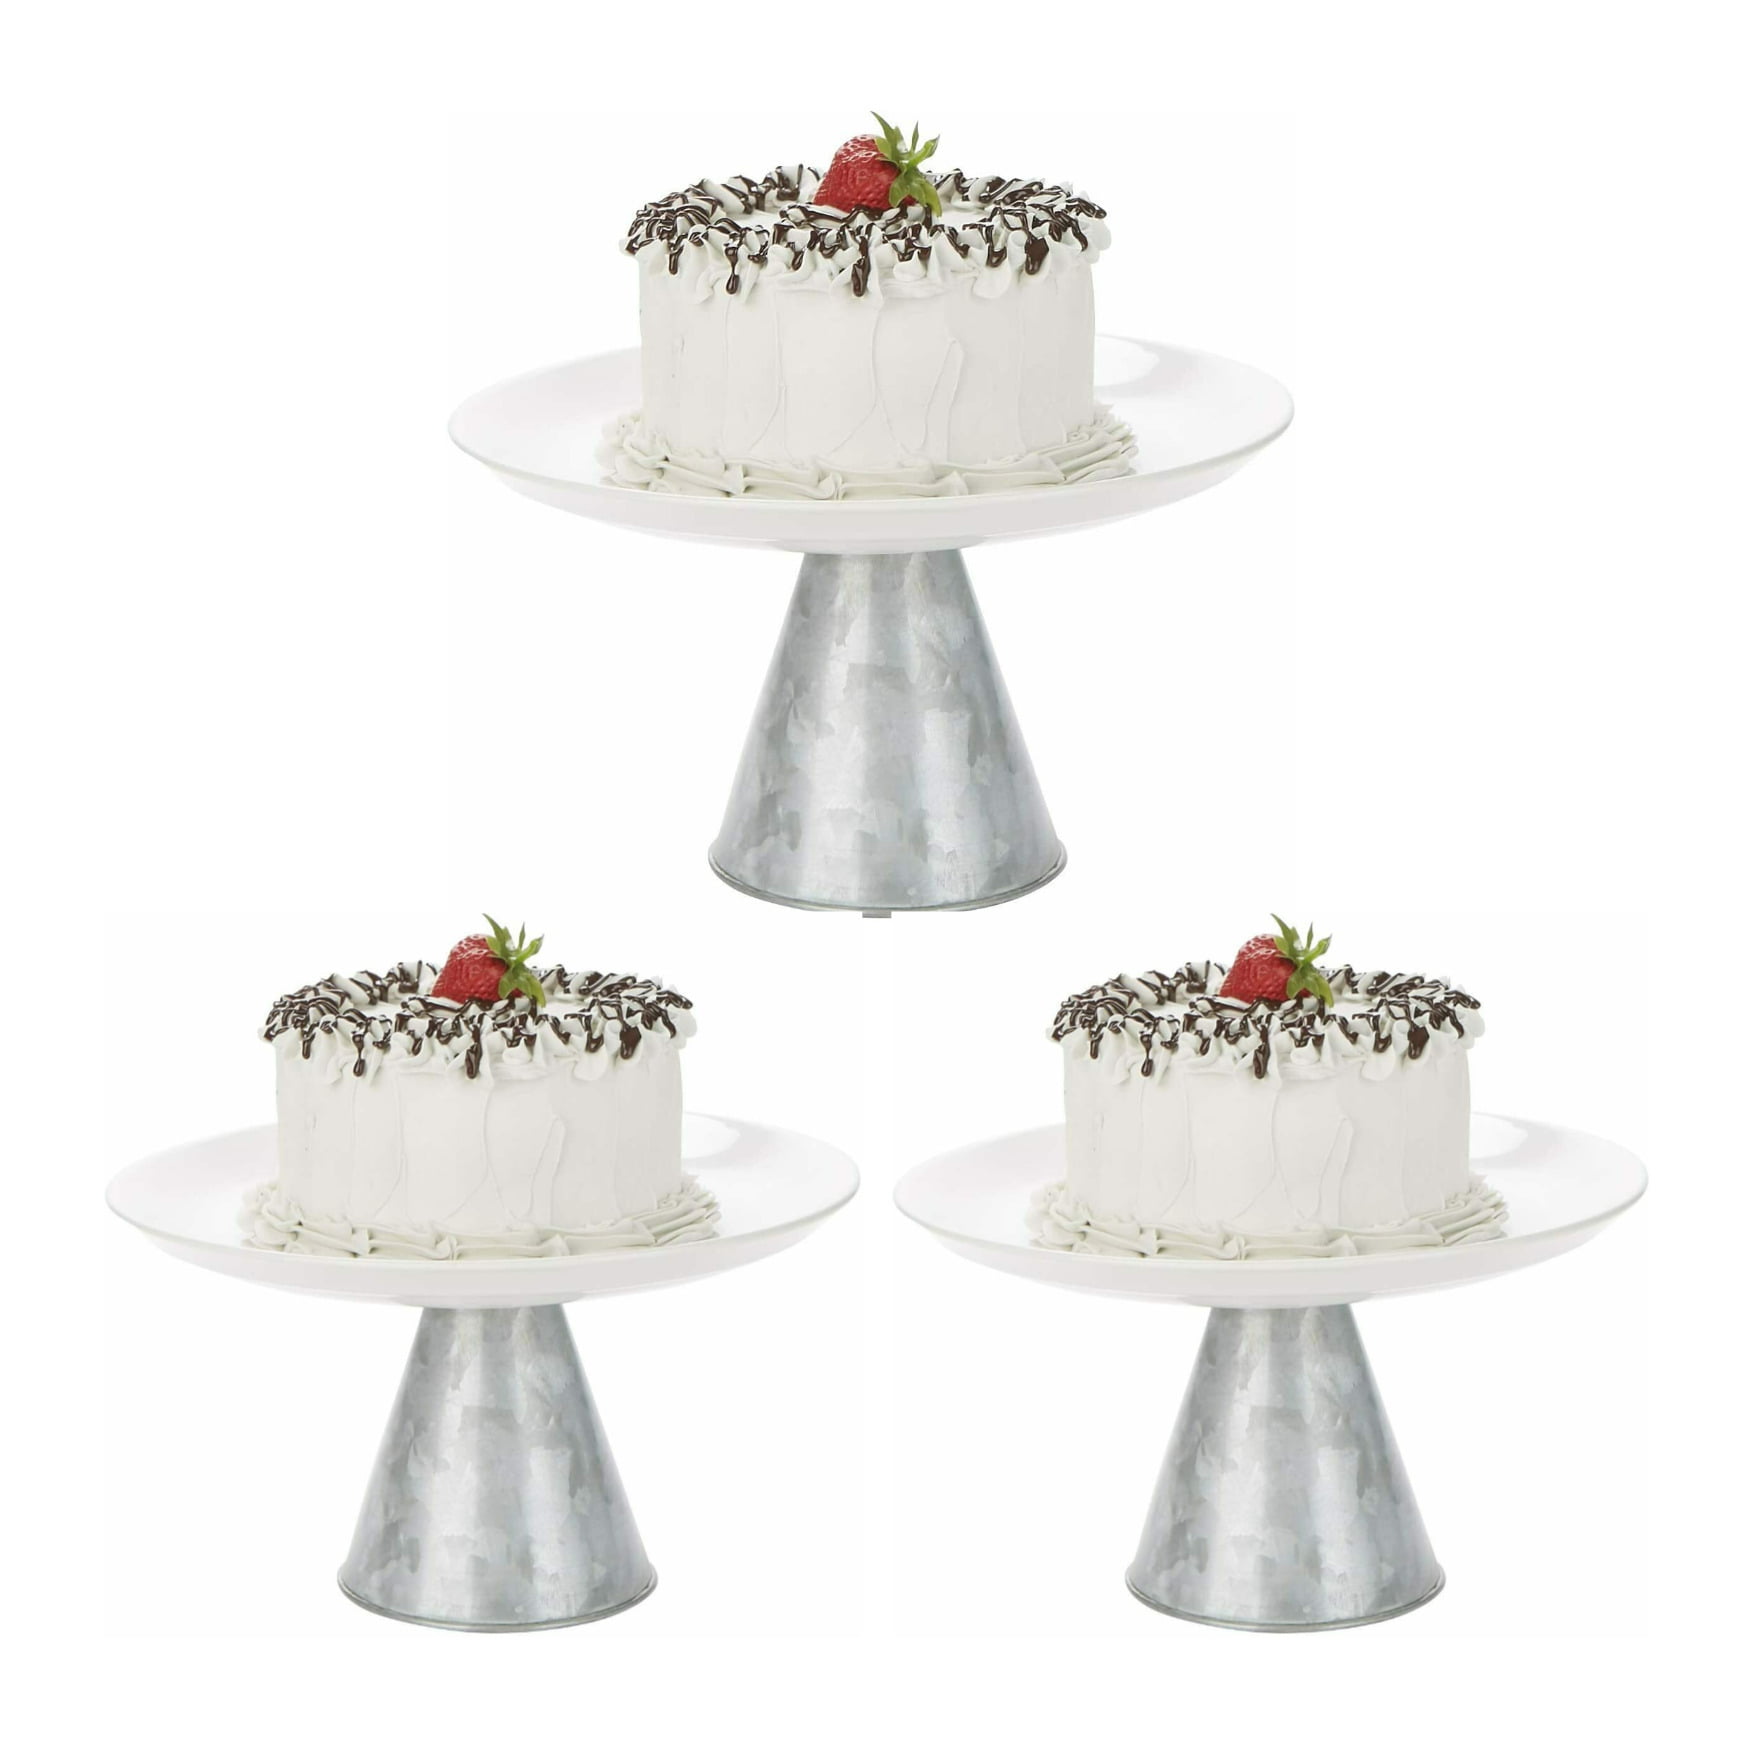 2 3 4 Tier Pastry Pie Decorative Stand Wedding Cake Cupcake Platform Plate NEW 